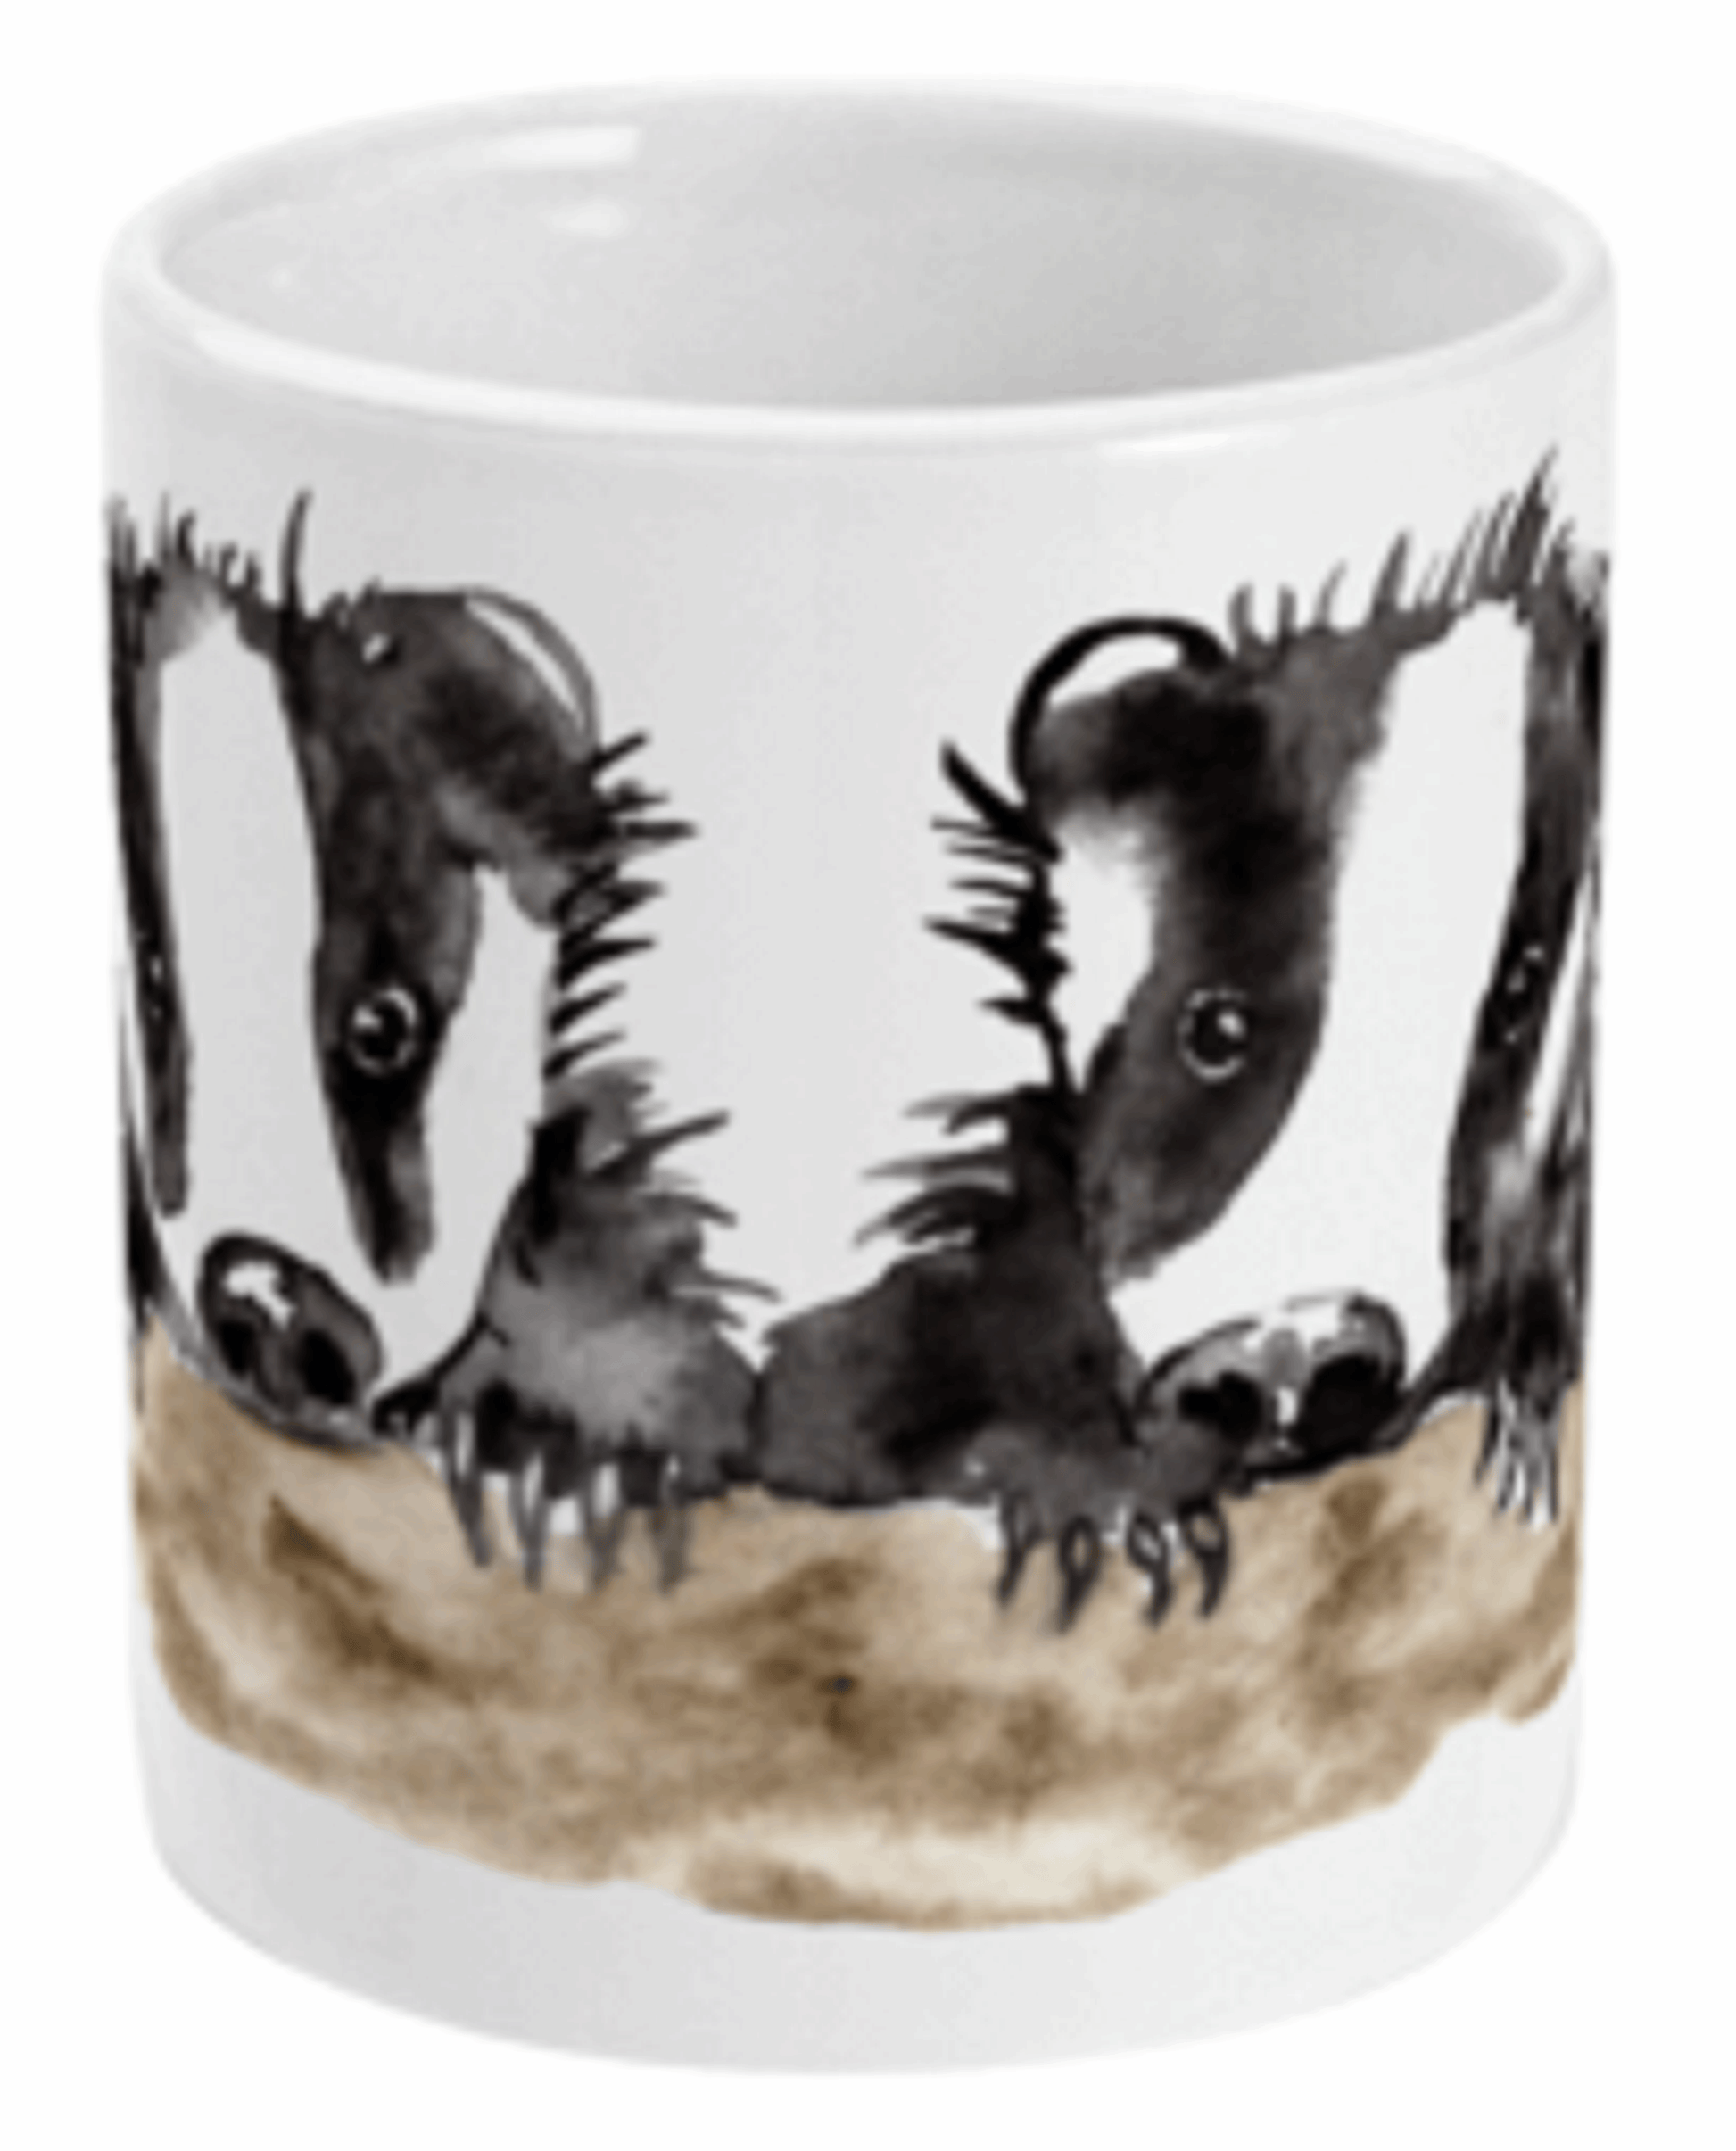  Two Badgers Beautiful Coffee or Tea Mug by Free Spirit Accessories sold by Free Spirit Accessories